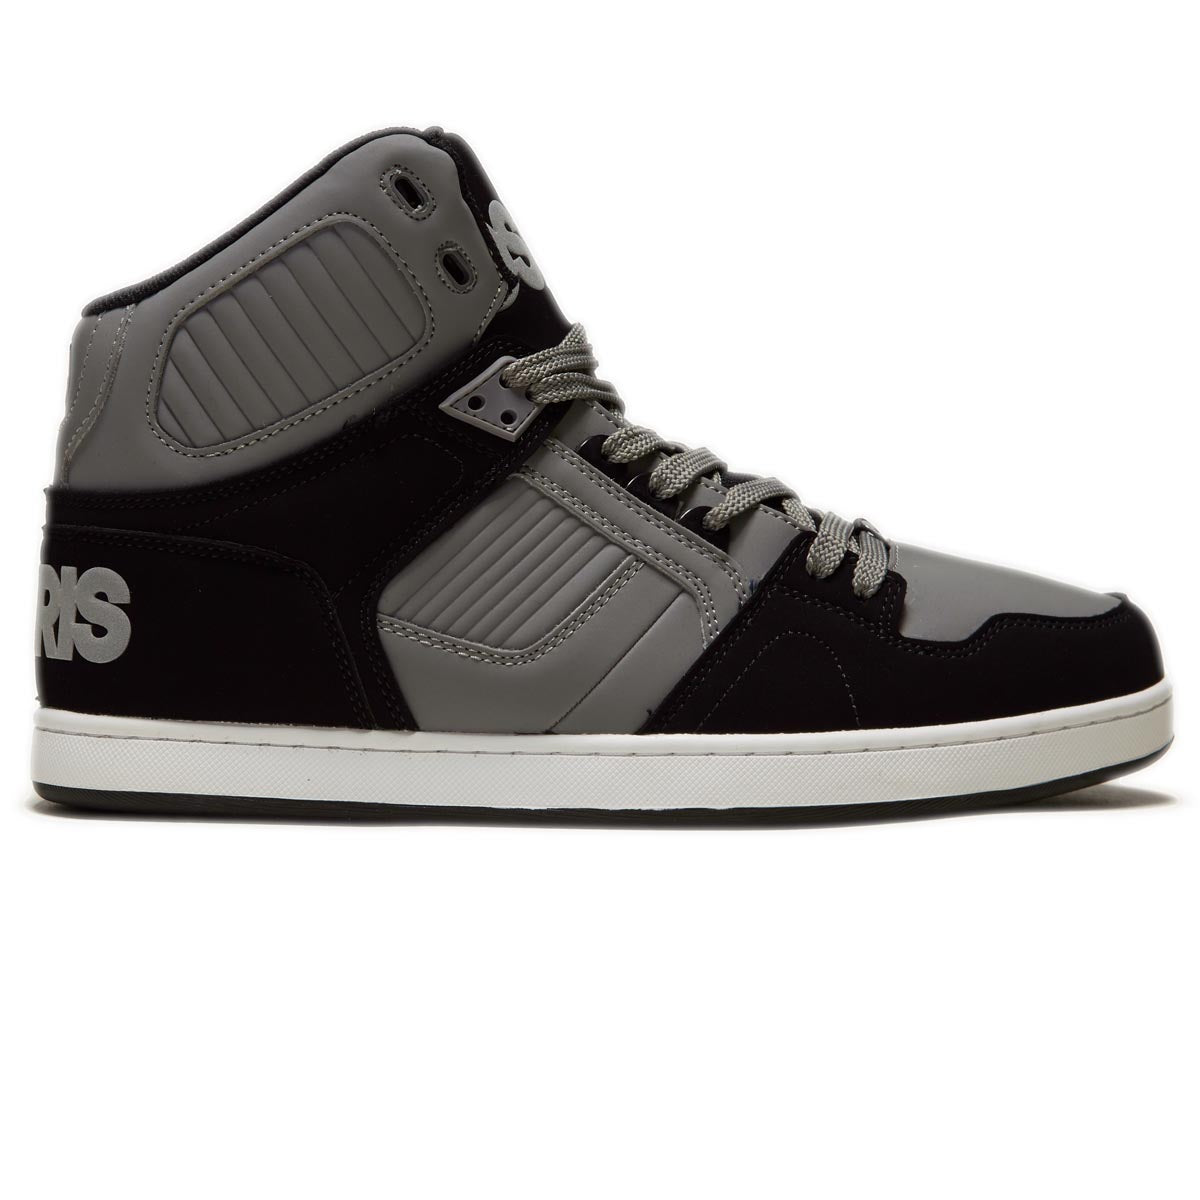 Osiris Nyc 83 Clk Shoes - Black/Grey/White image 1